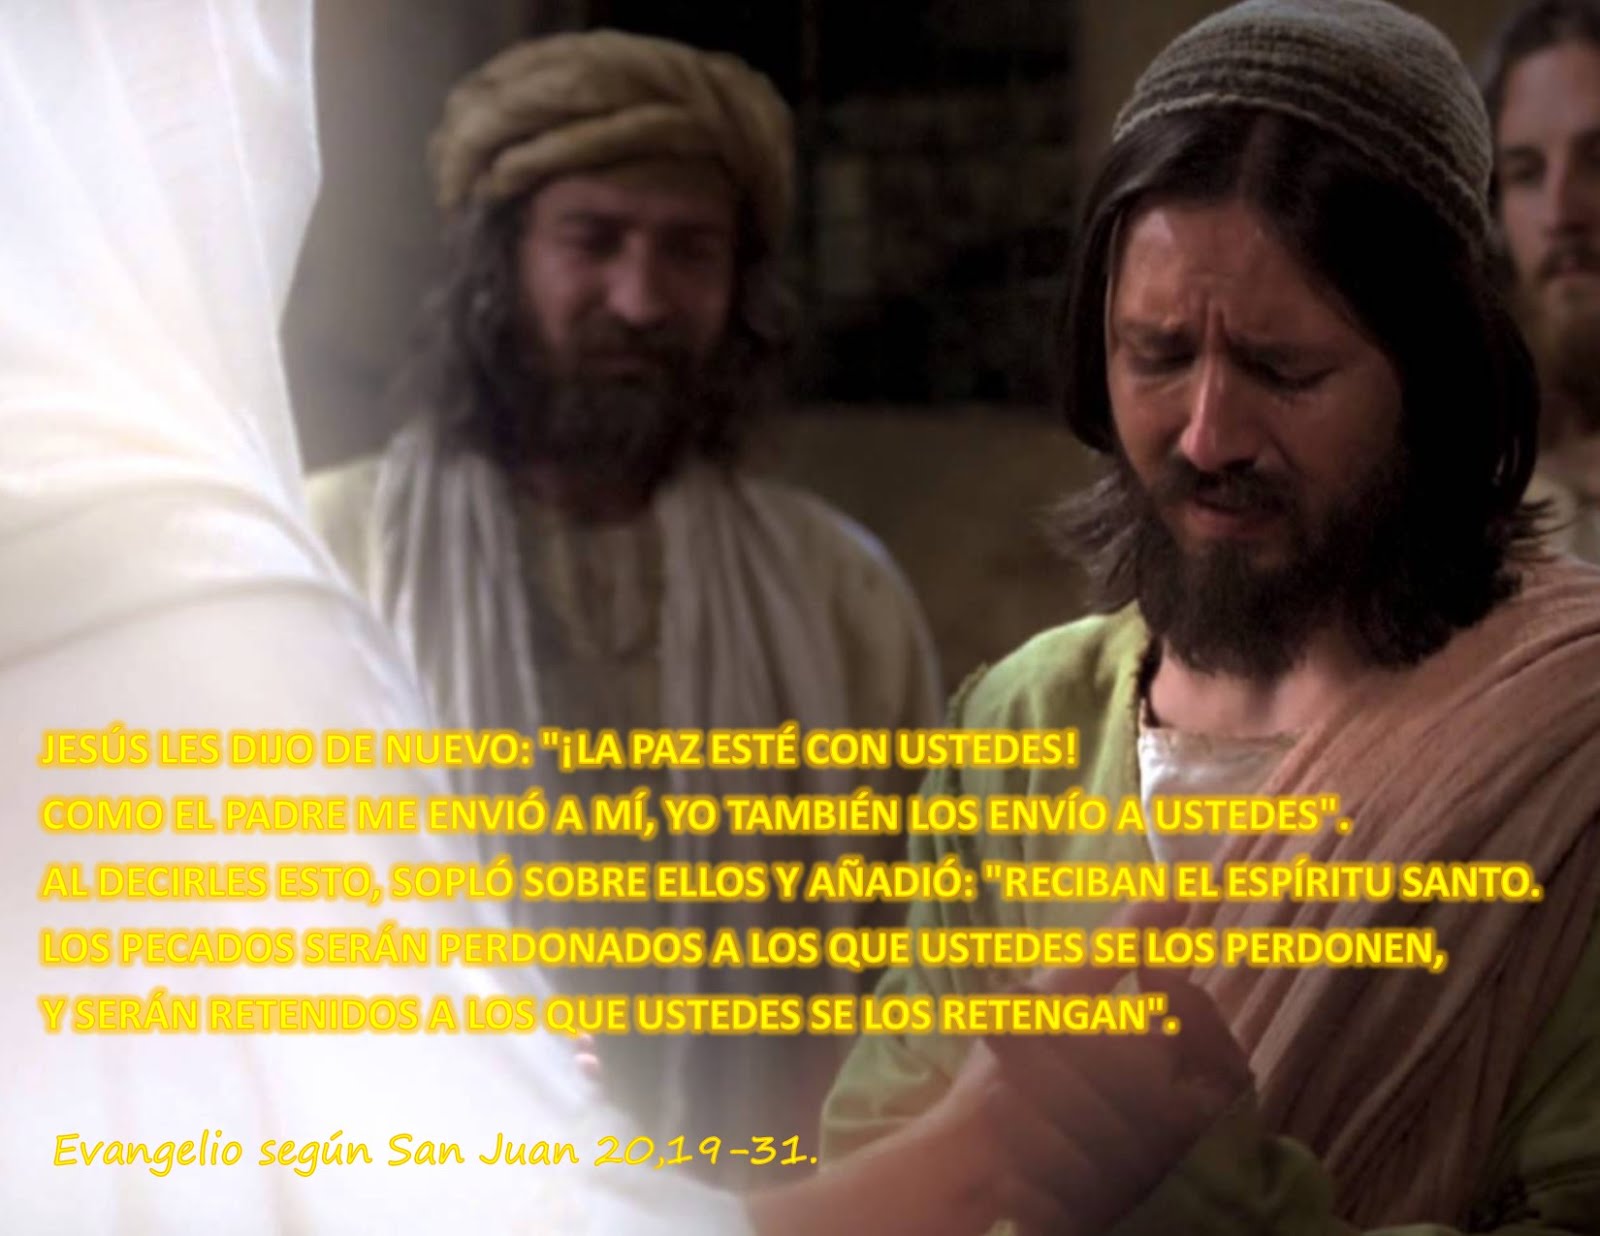 Evangelio según San Juan 20,19-31.